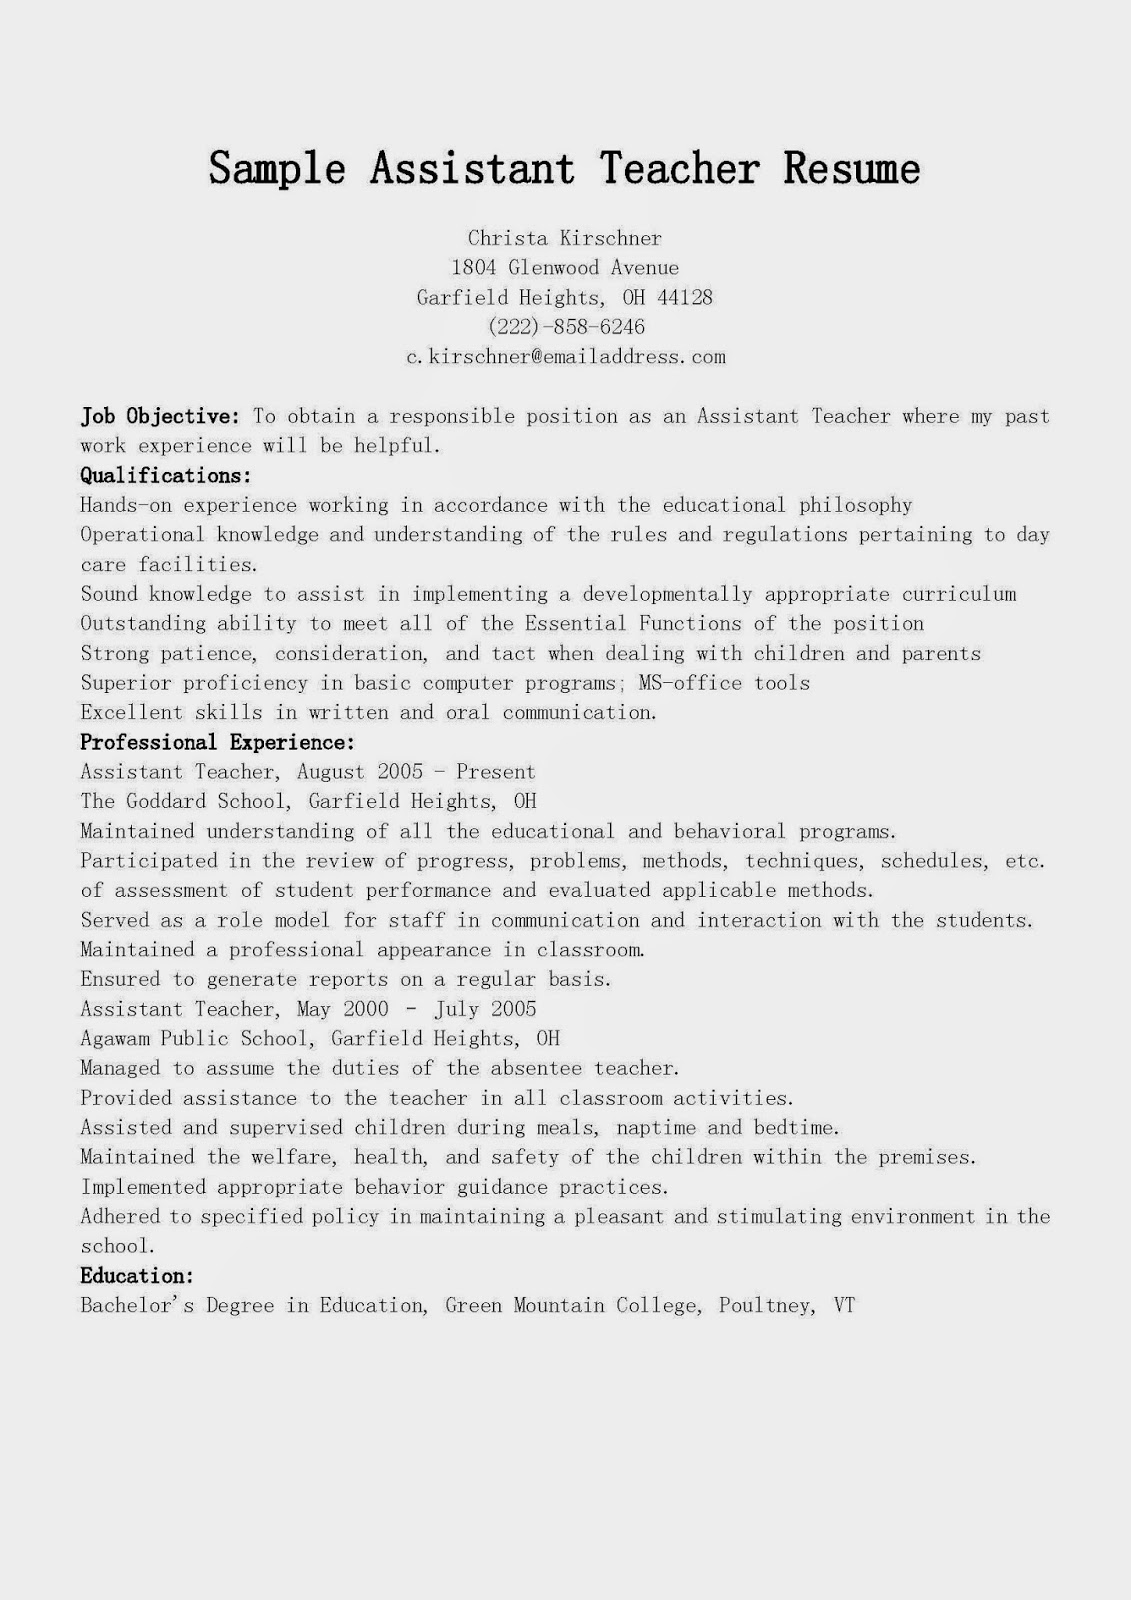 Combination resume for teachers